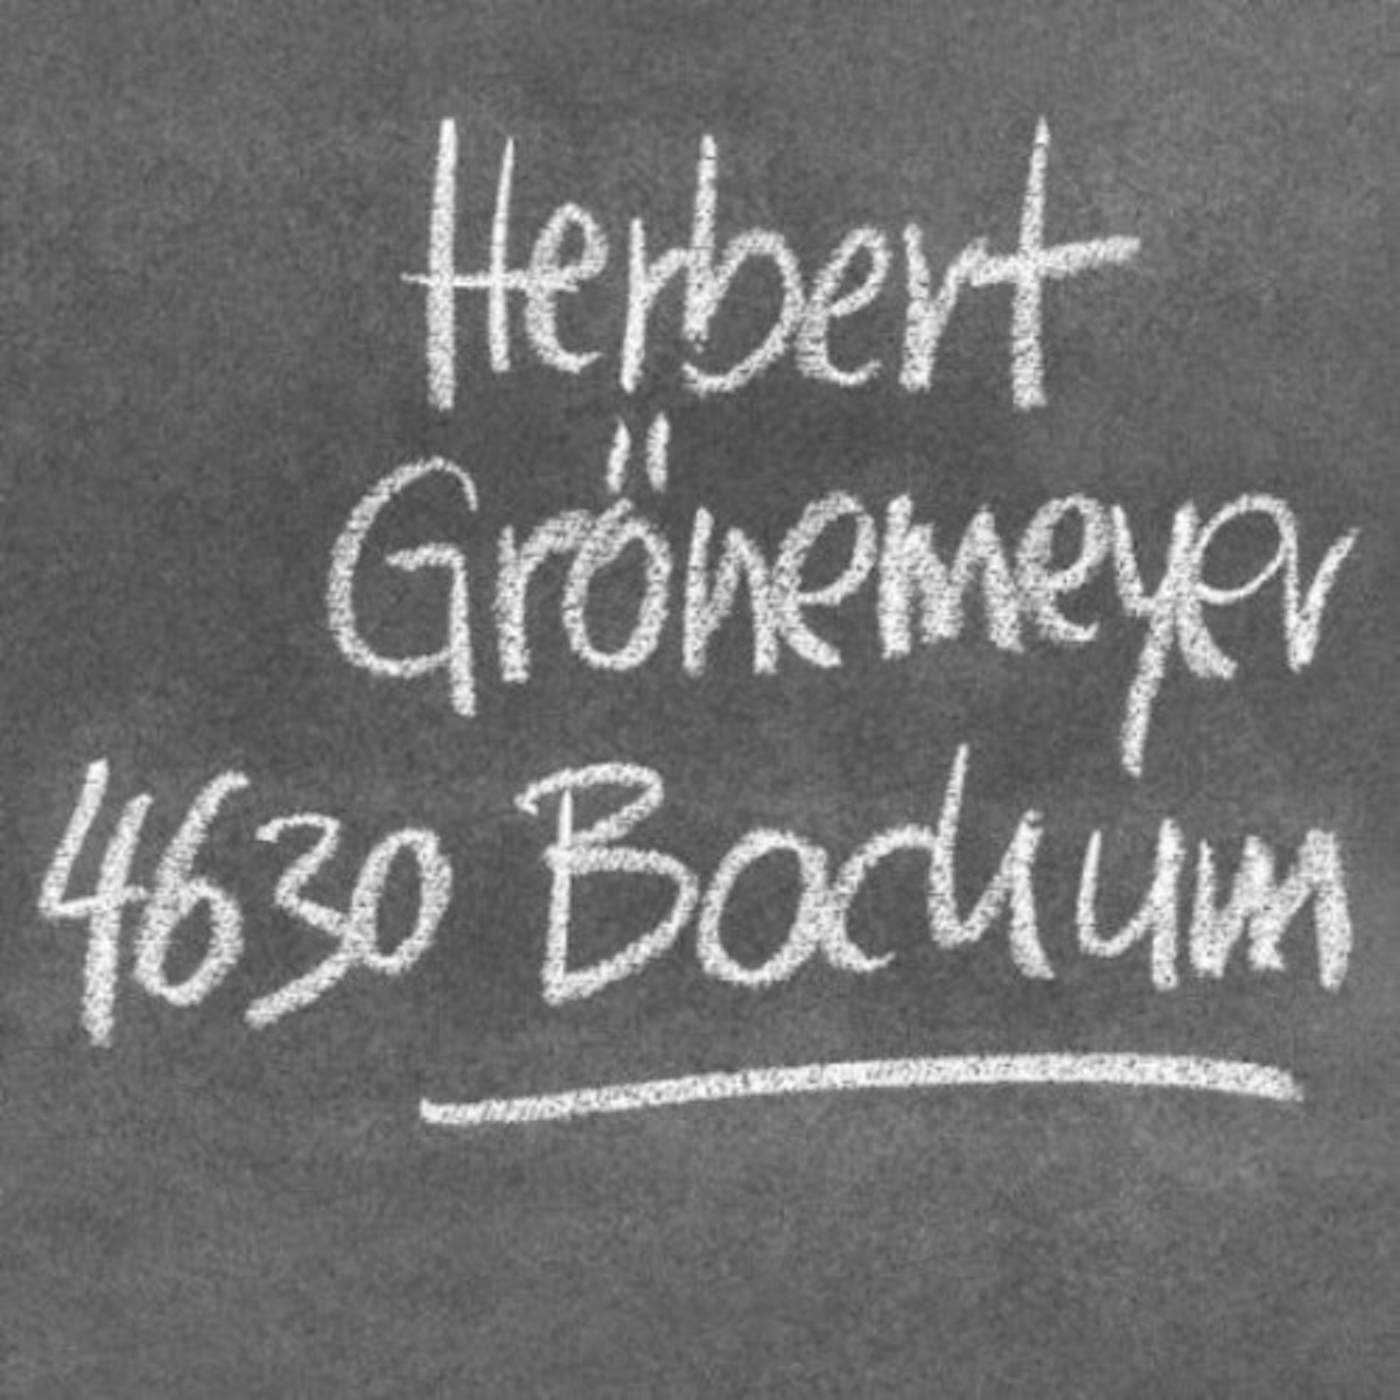 Herbert Groenemeyer BOCHUM/180G-REMASTER Vinyl Record